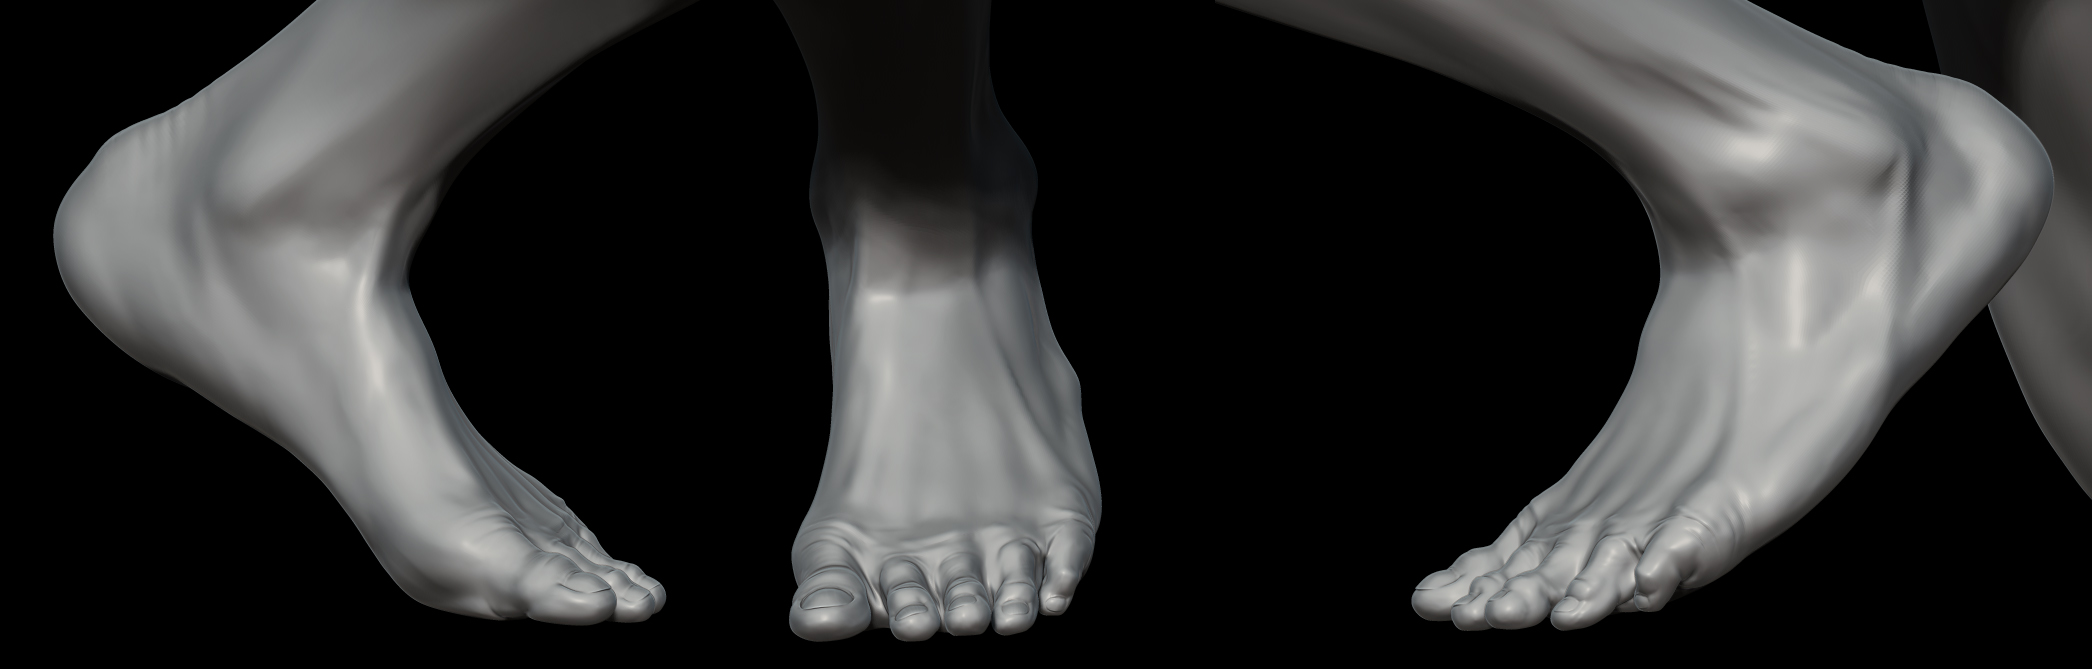 Feets 360 1.jpg